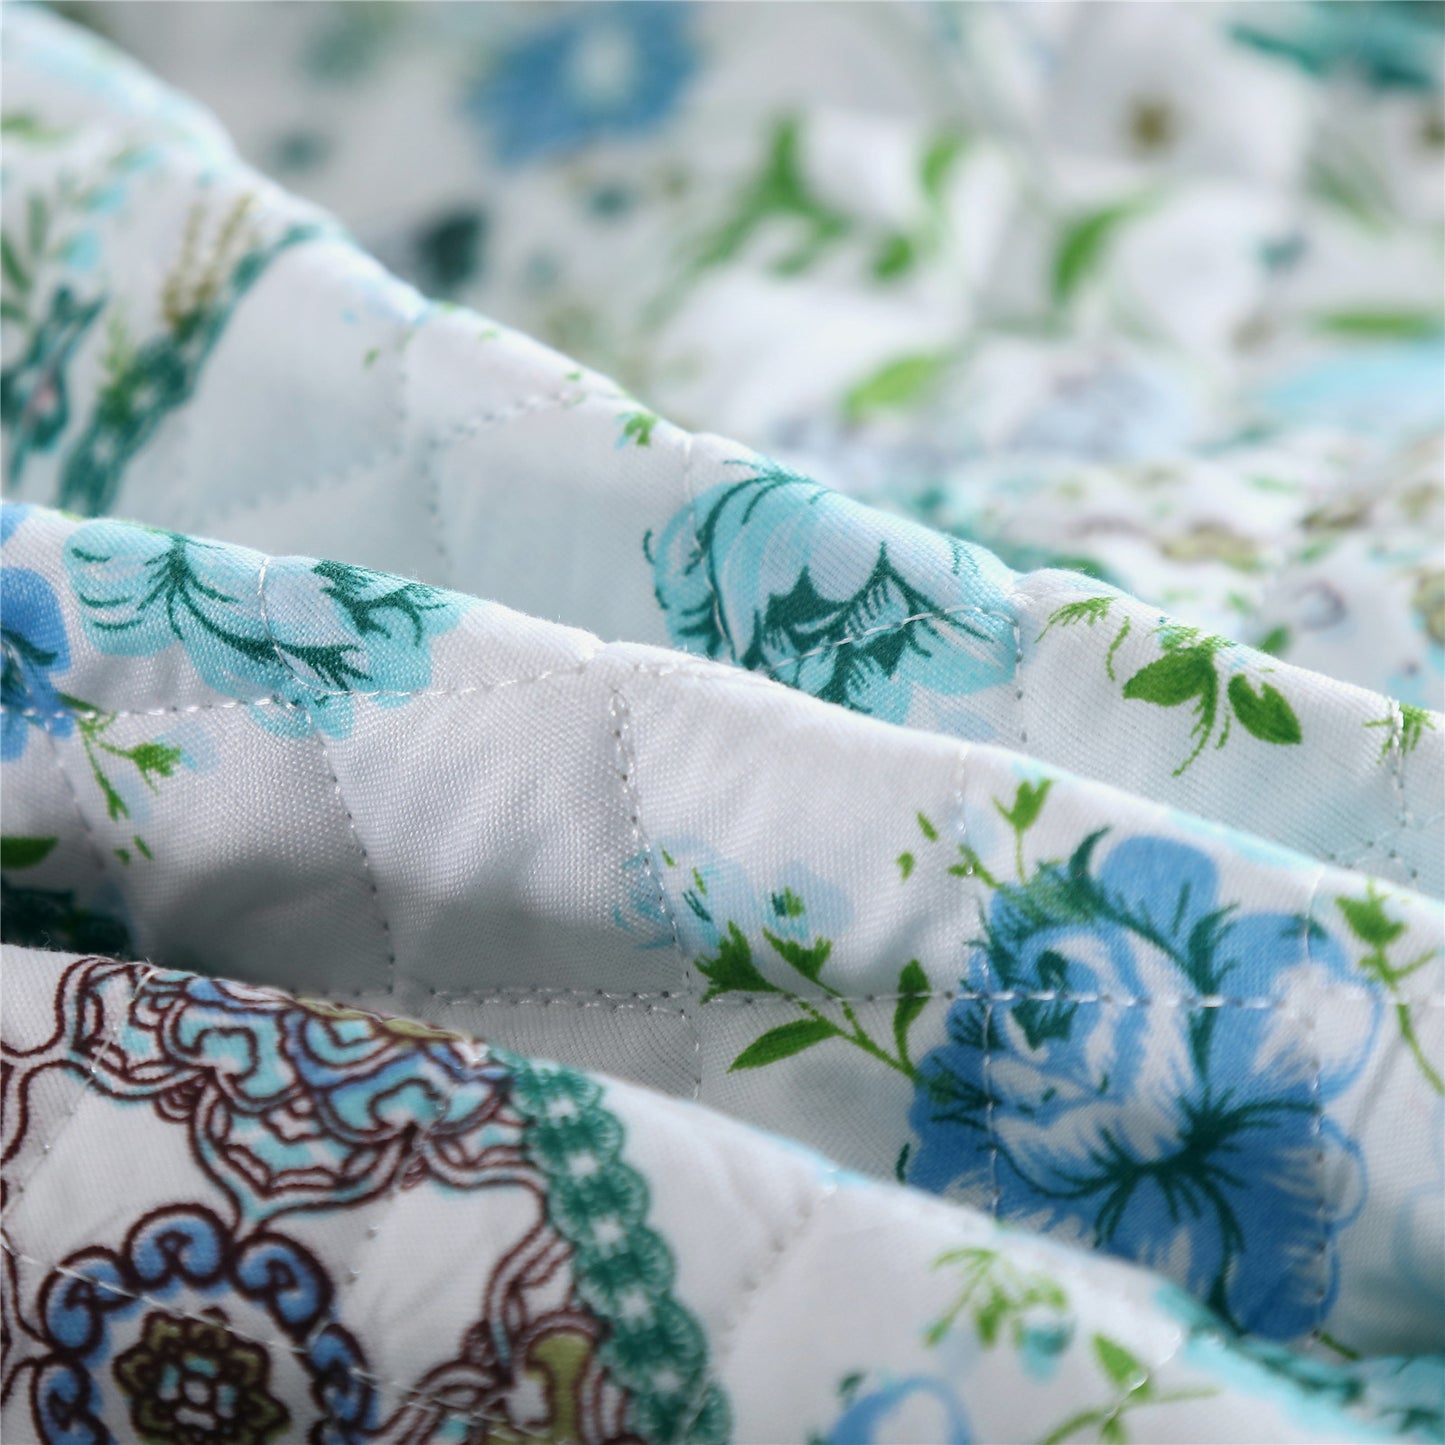 WongsBedding Green Floral Patchwork Quilt Bedspread Sets 3 Pieces Quilt Set With 2 Pillowshams